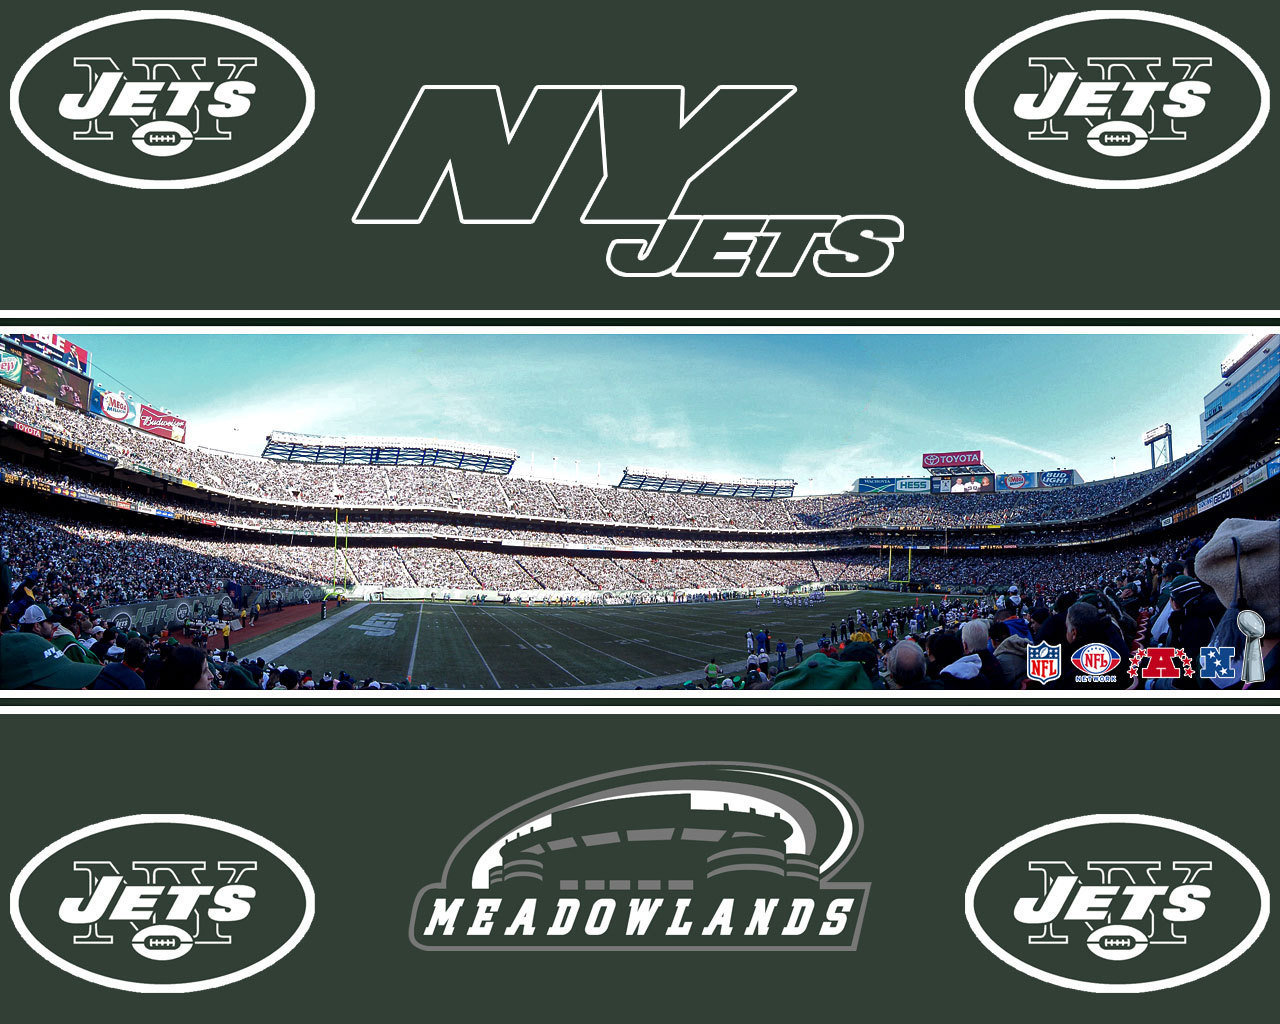 New York Jets Desktop Wallpaper